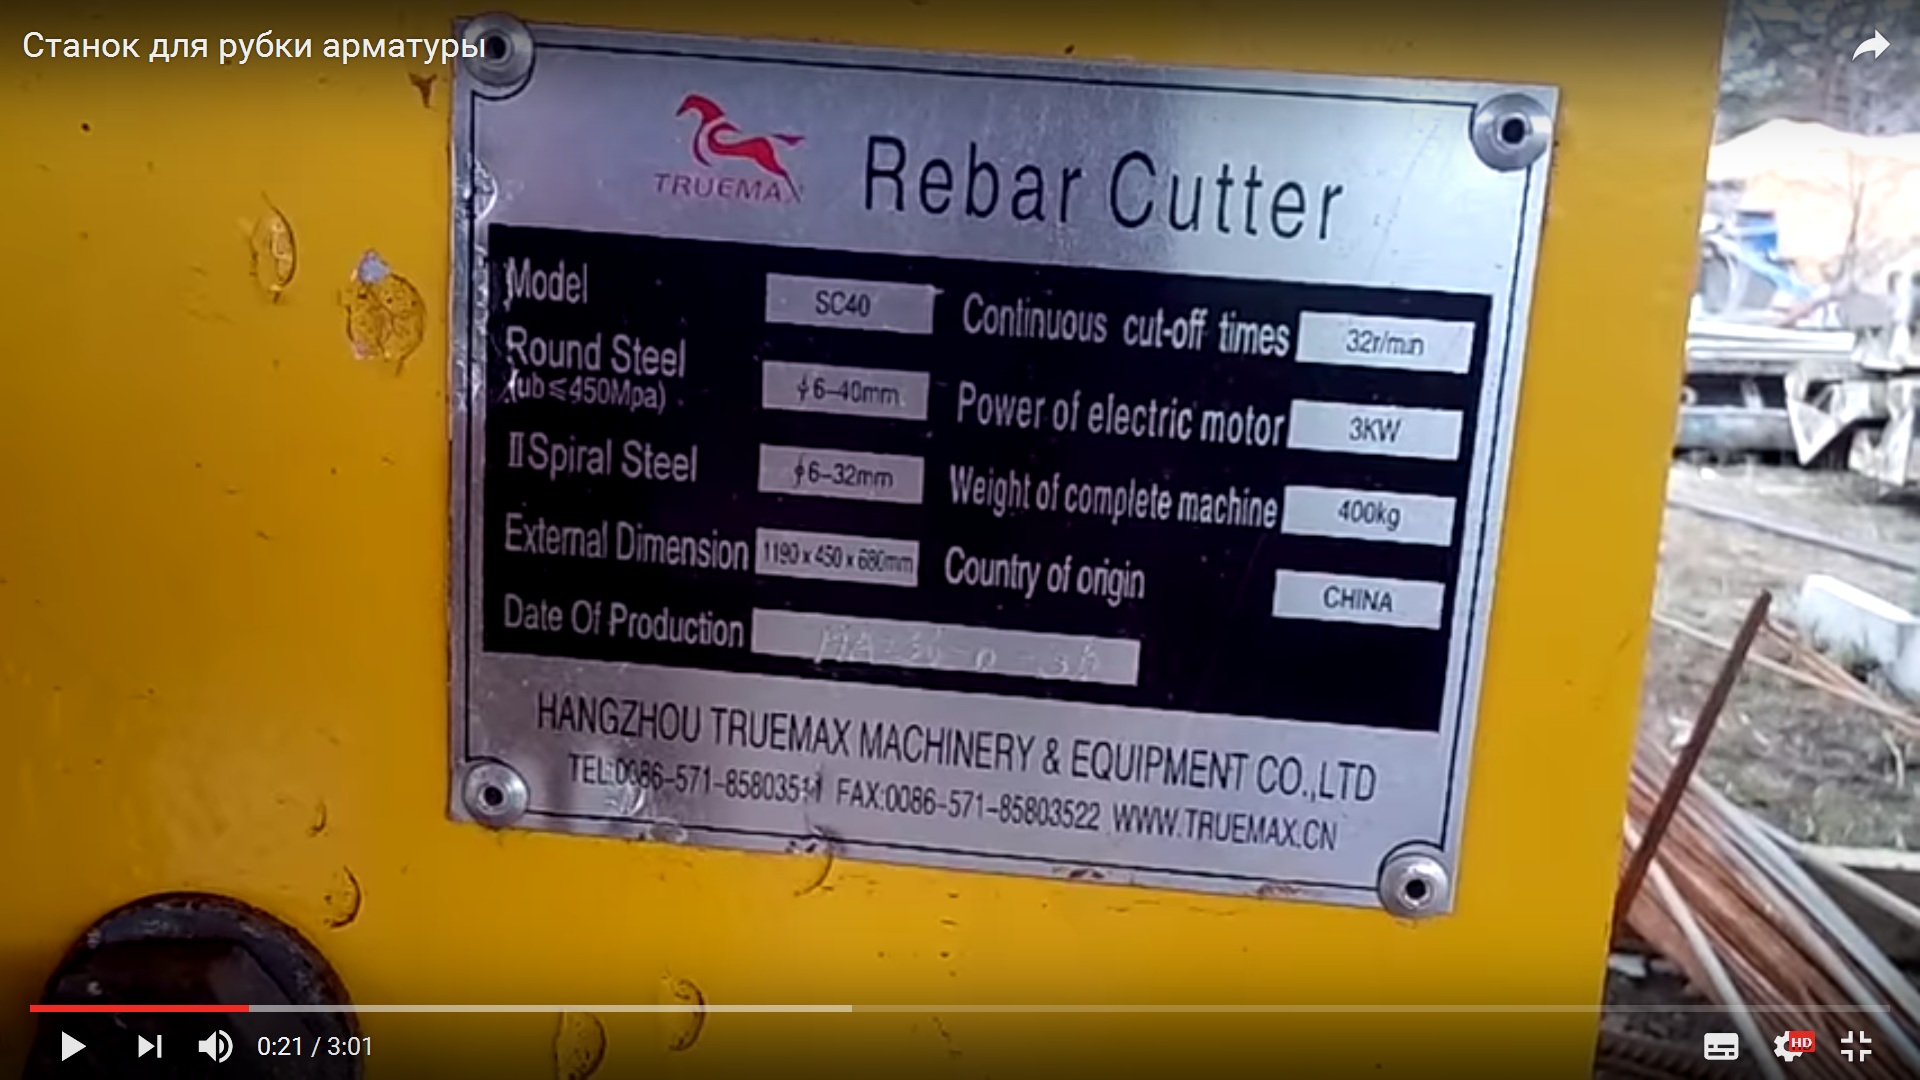 Шильдик рубщика арматуры, станка для рубки арматуры стационарного Rebar Cutter Китай China, до 450МПа